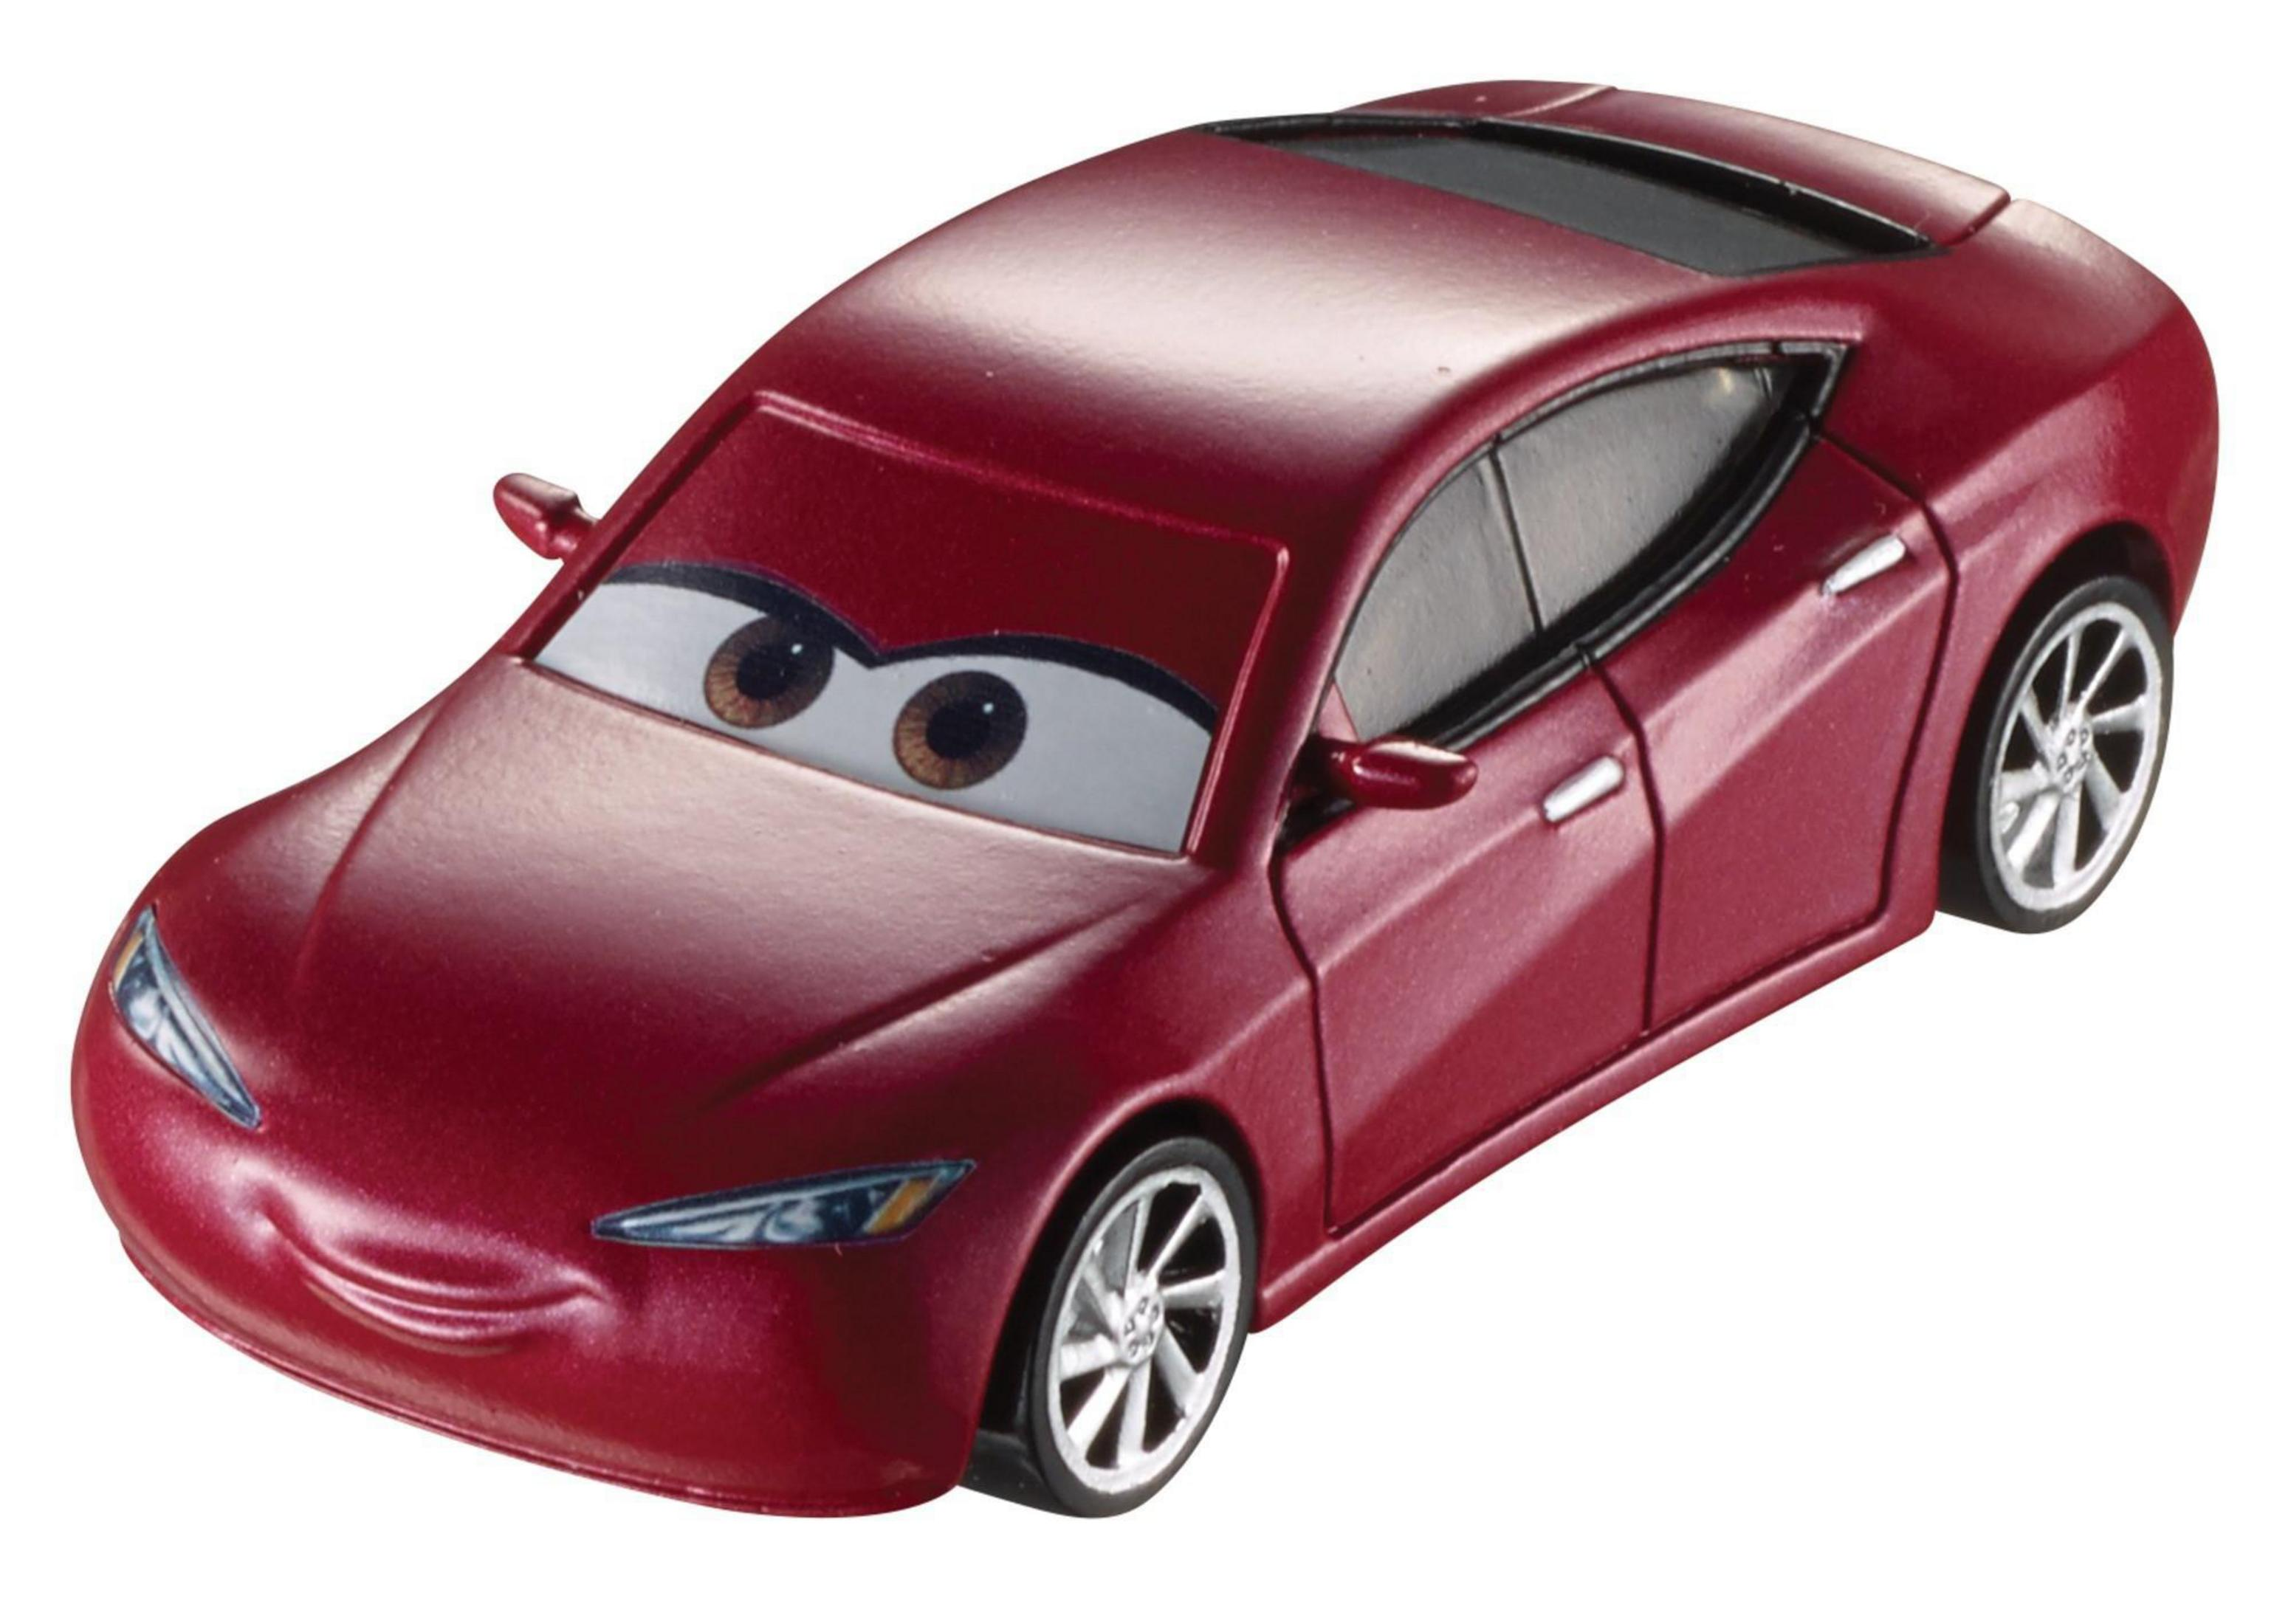 CARS GKB48 DIE-CAST FAHRZEUG Mehrfarbig SORT CHARACTER Spielzeugauto